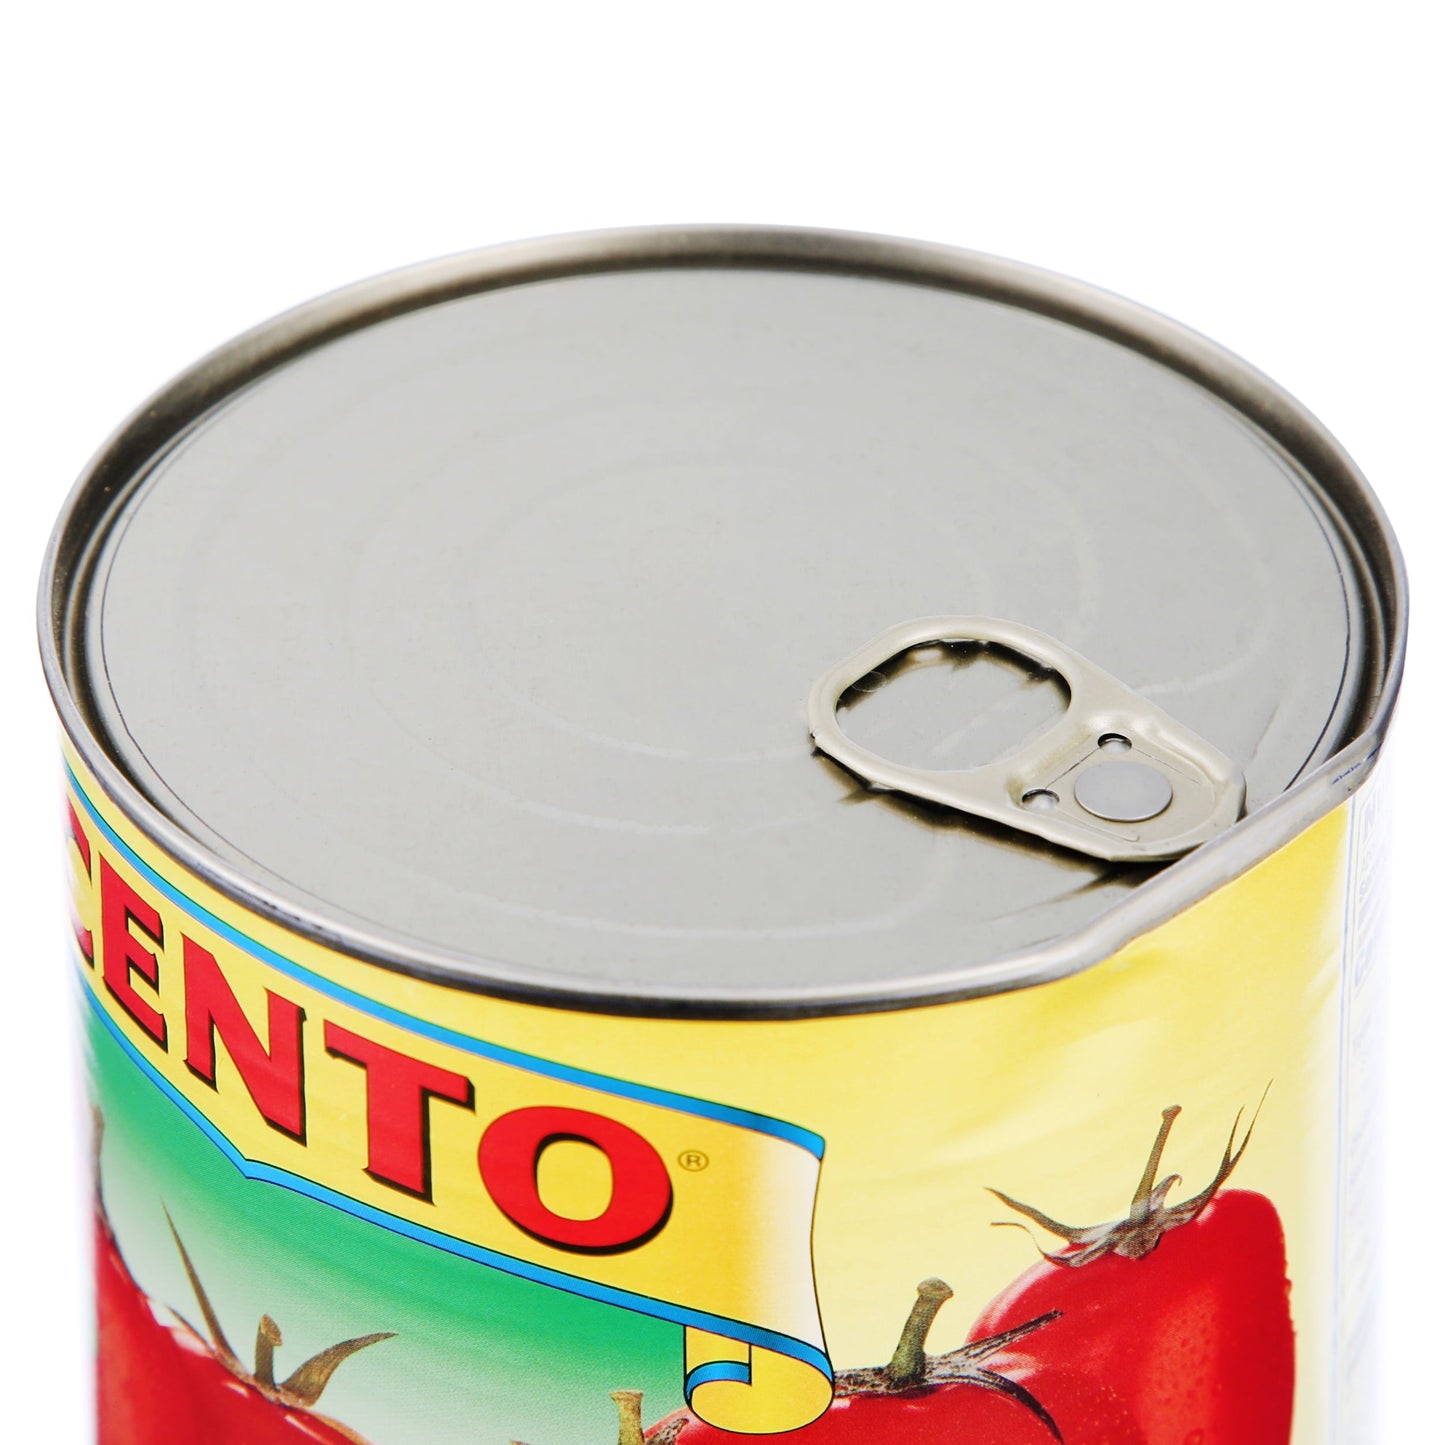 Cento Peeled Tomatoes, Italian Style, 28 oz